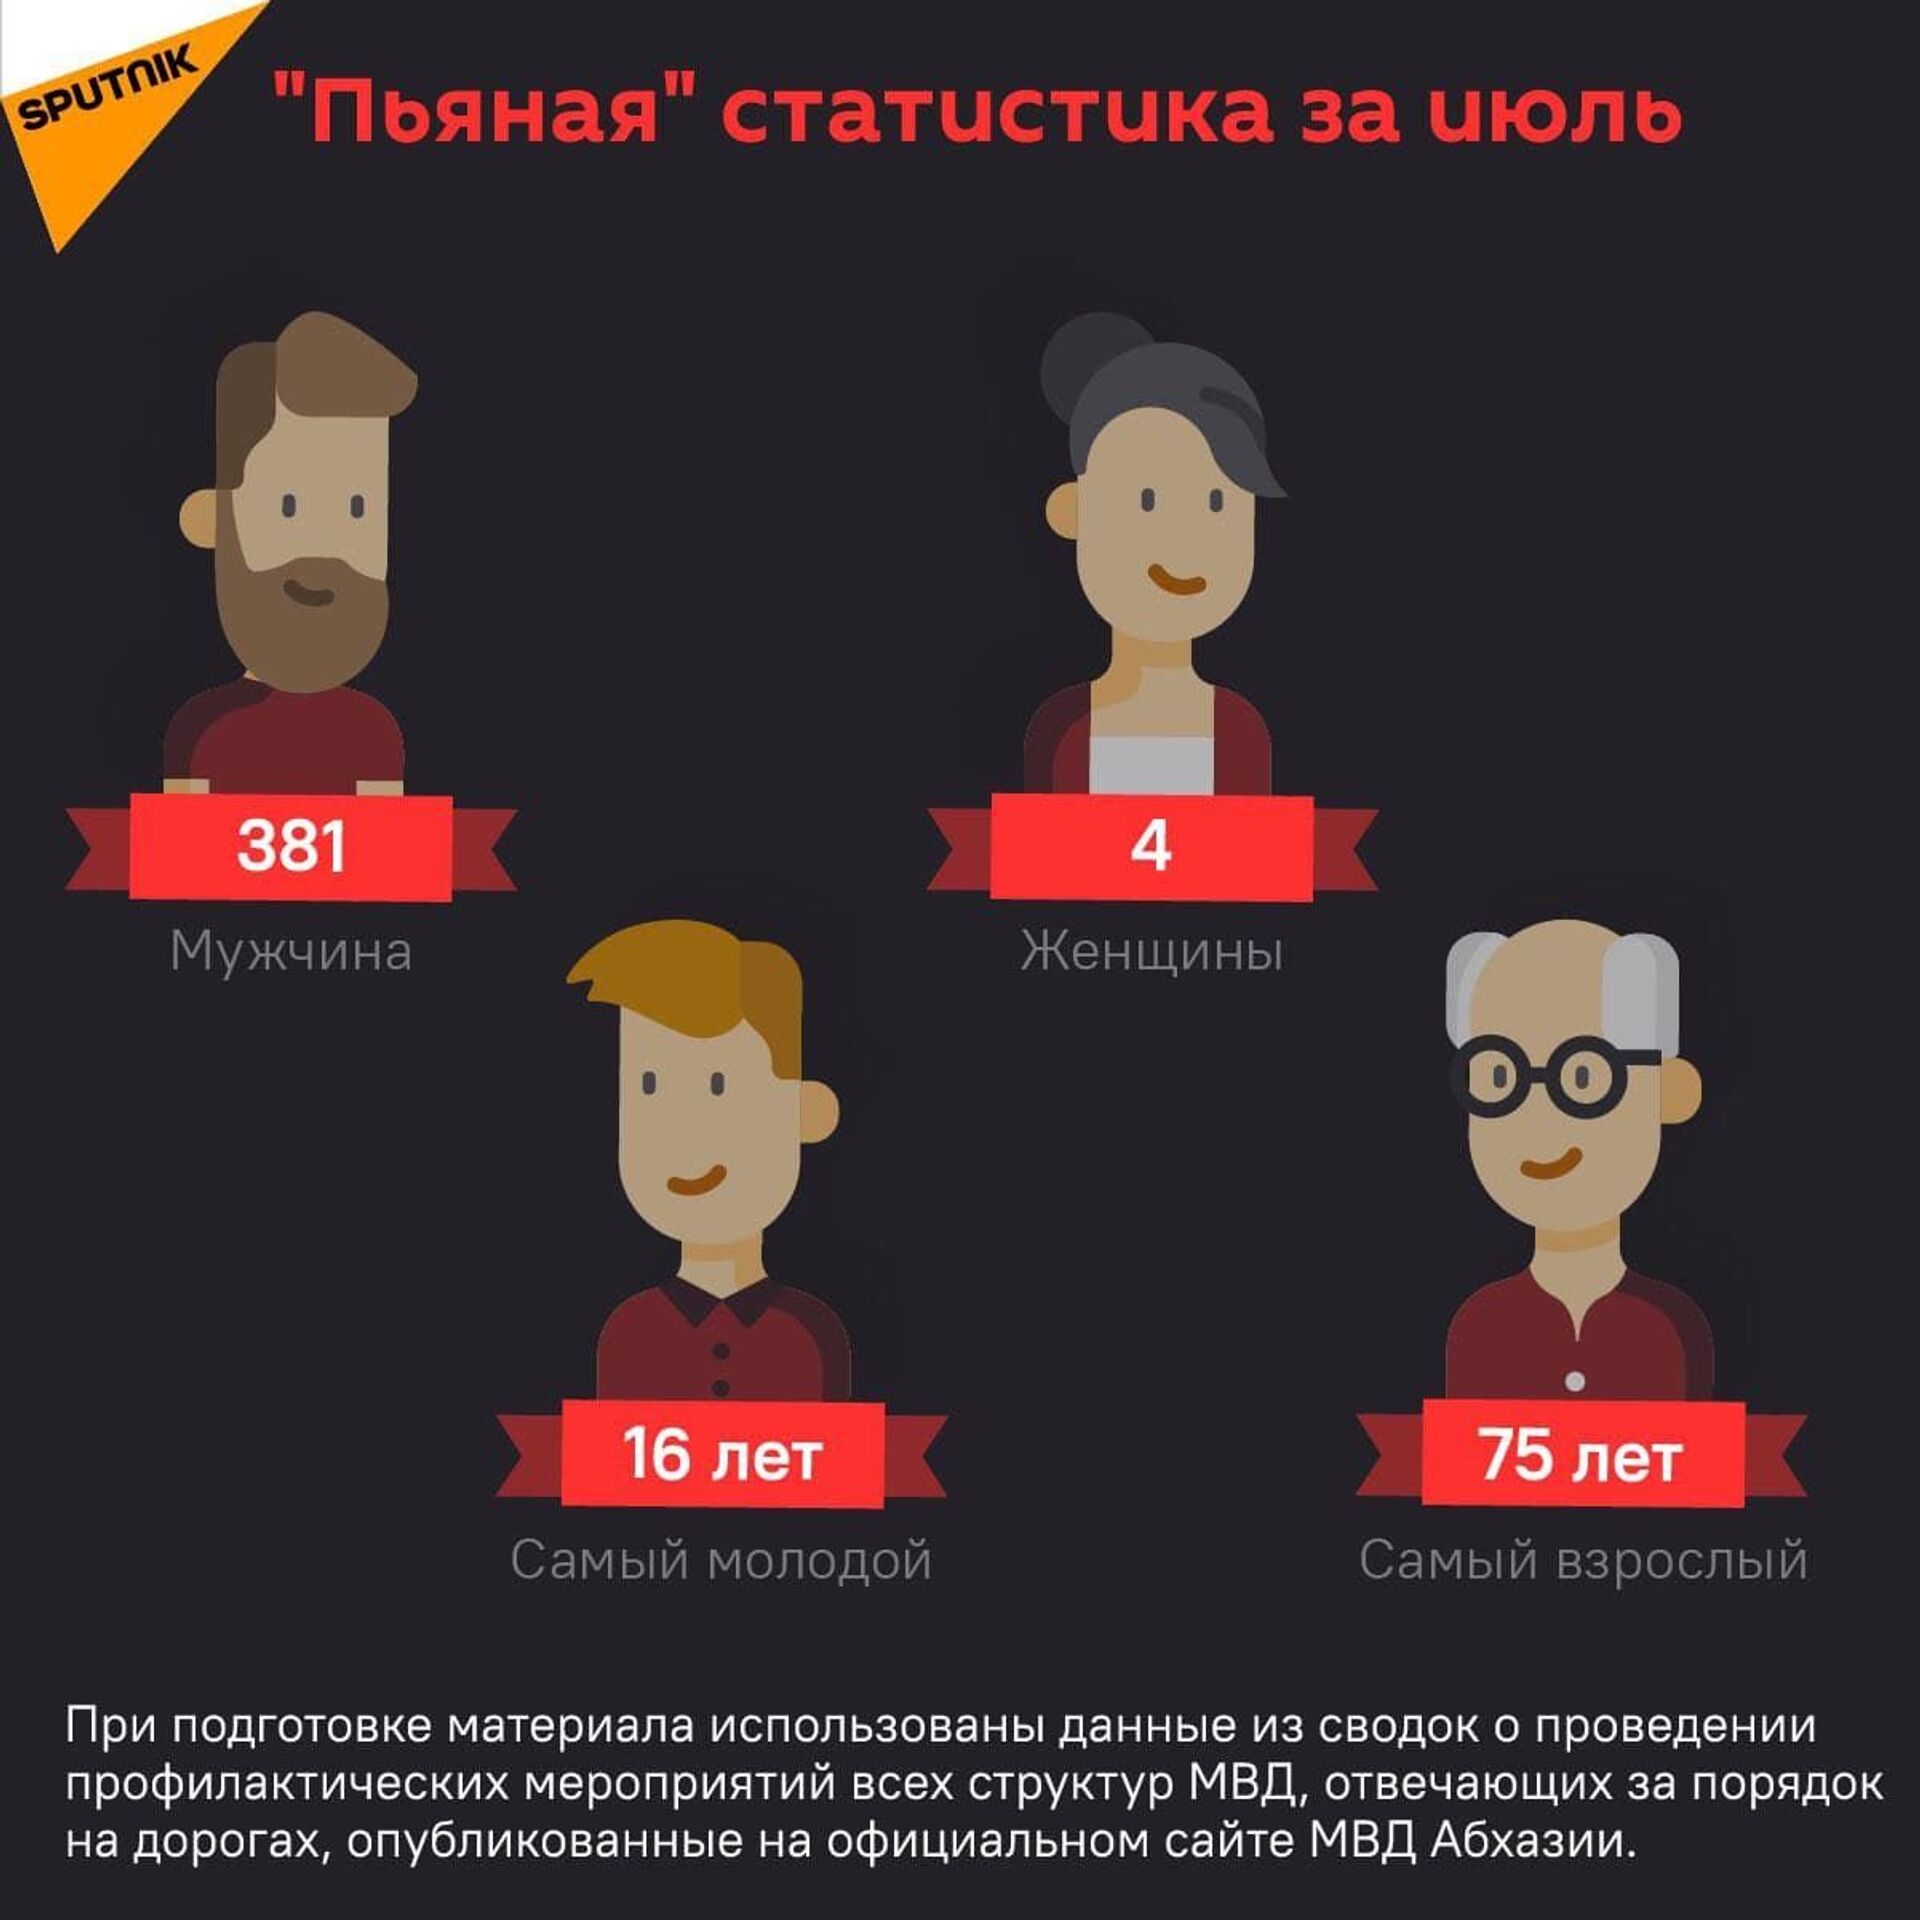 Пьяная статистика на июль месяц  - Sputnik Абхазия, 1920, 12.10.2021